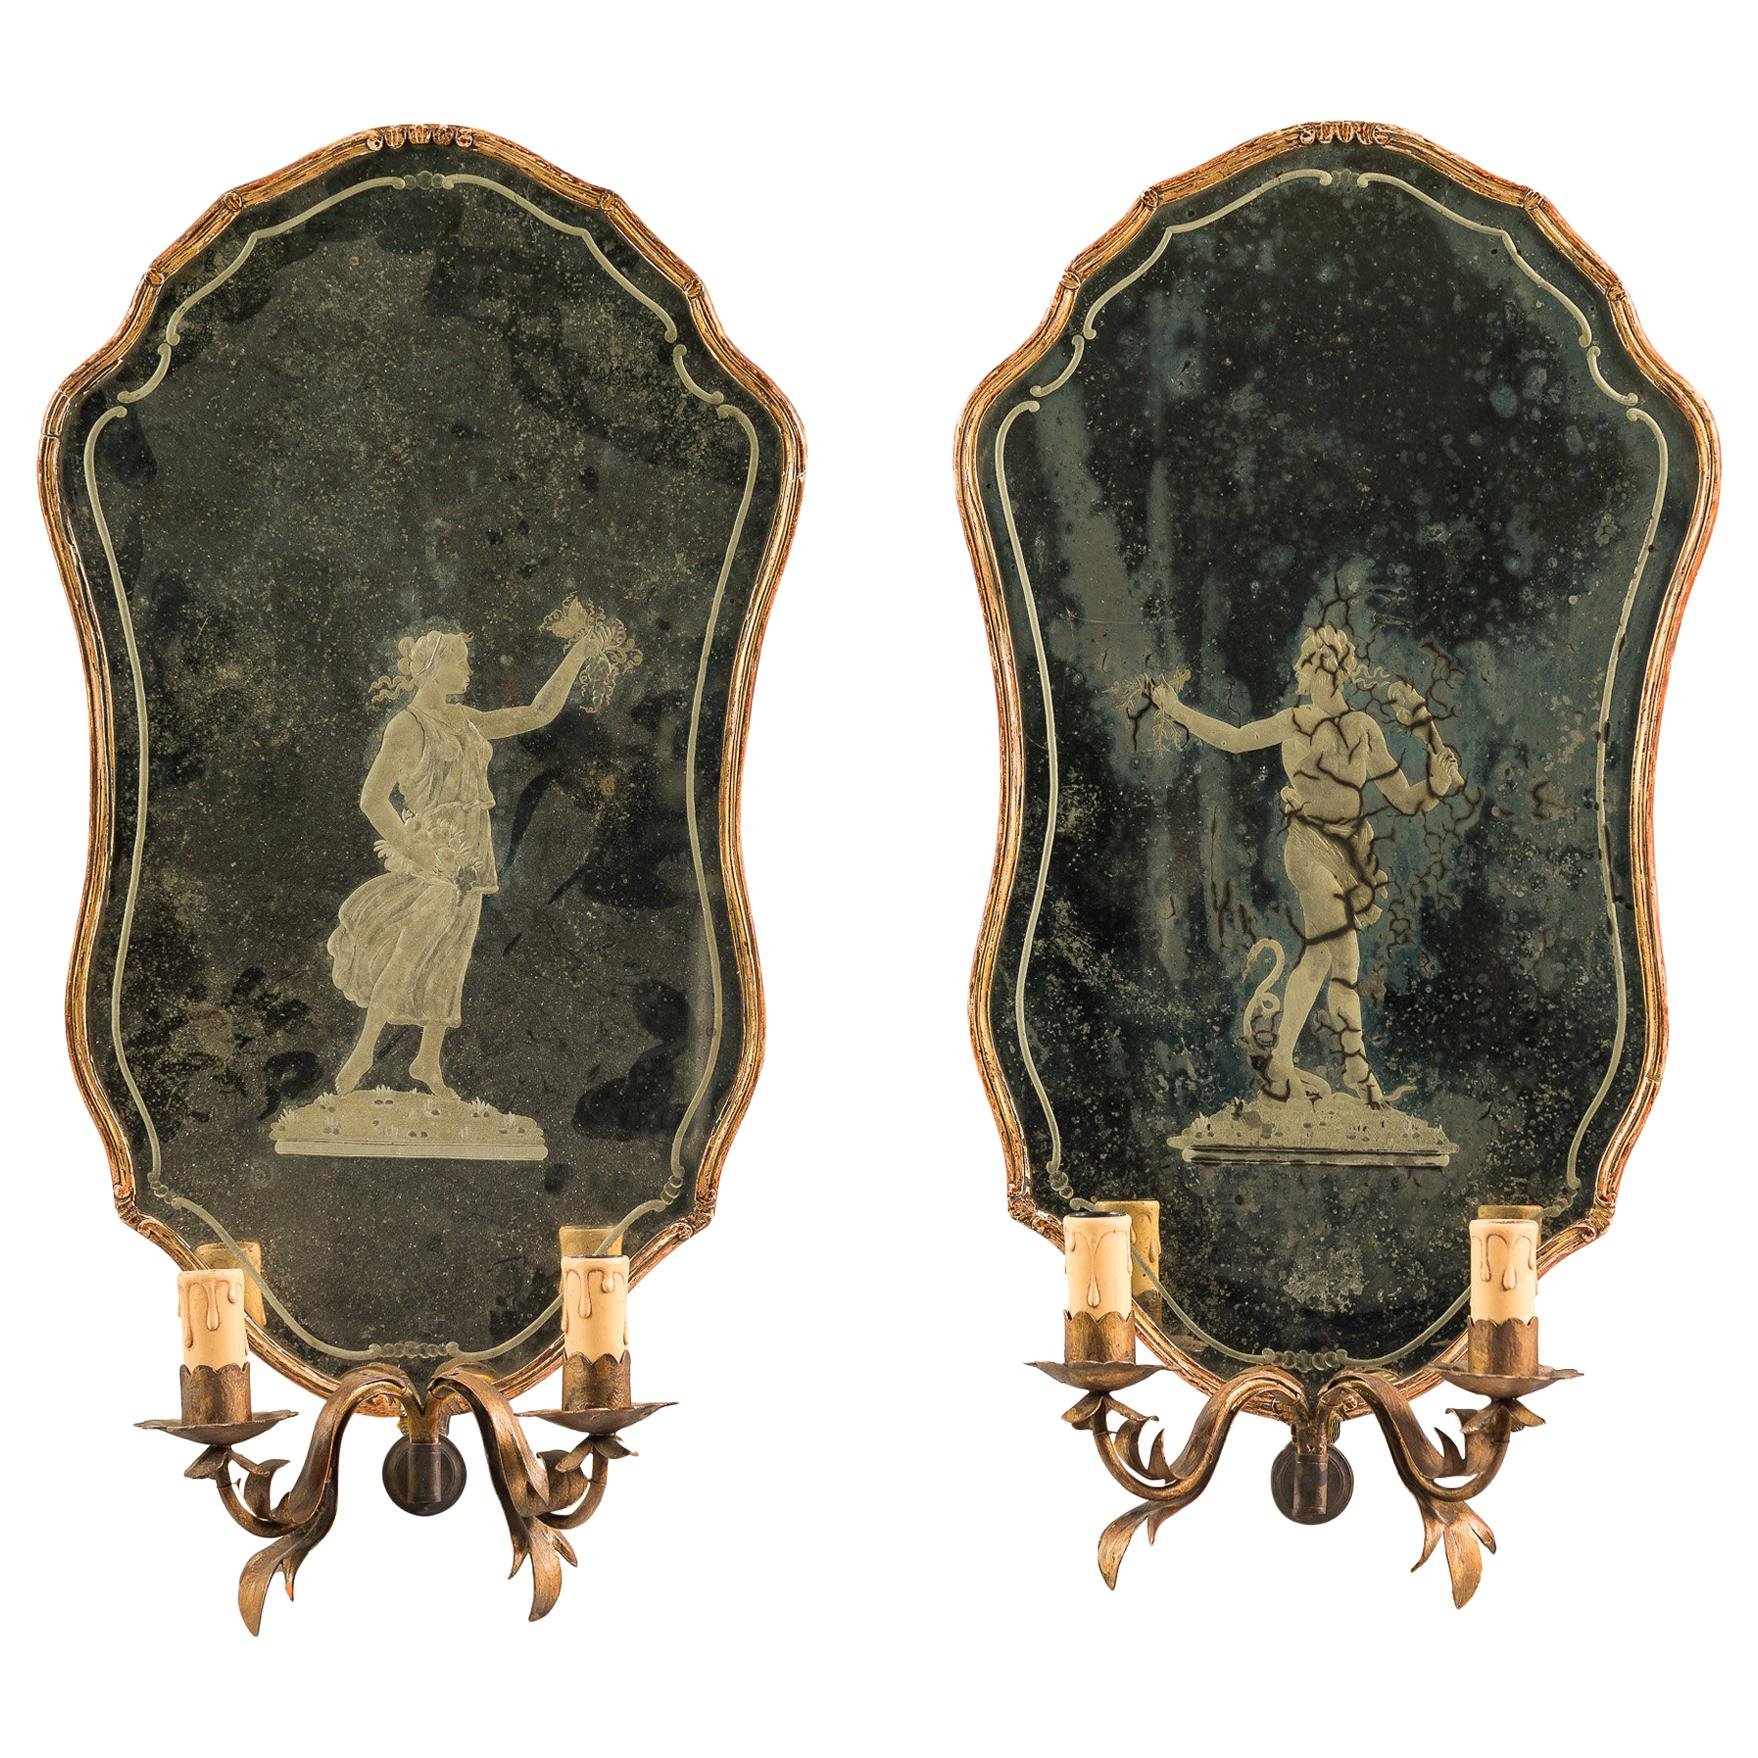 Pair of Wooden Mirrors with Murano Glass, Venice 18th Century, Venetian Rococò